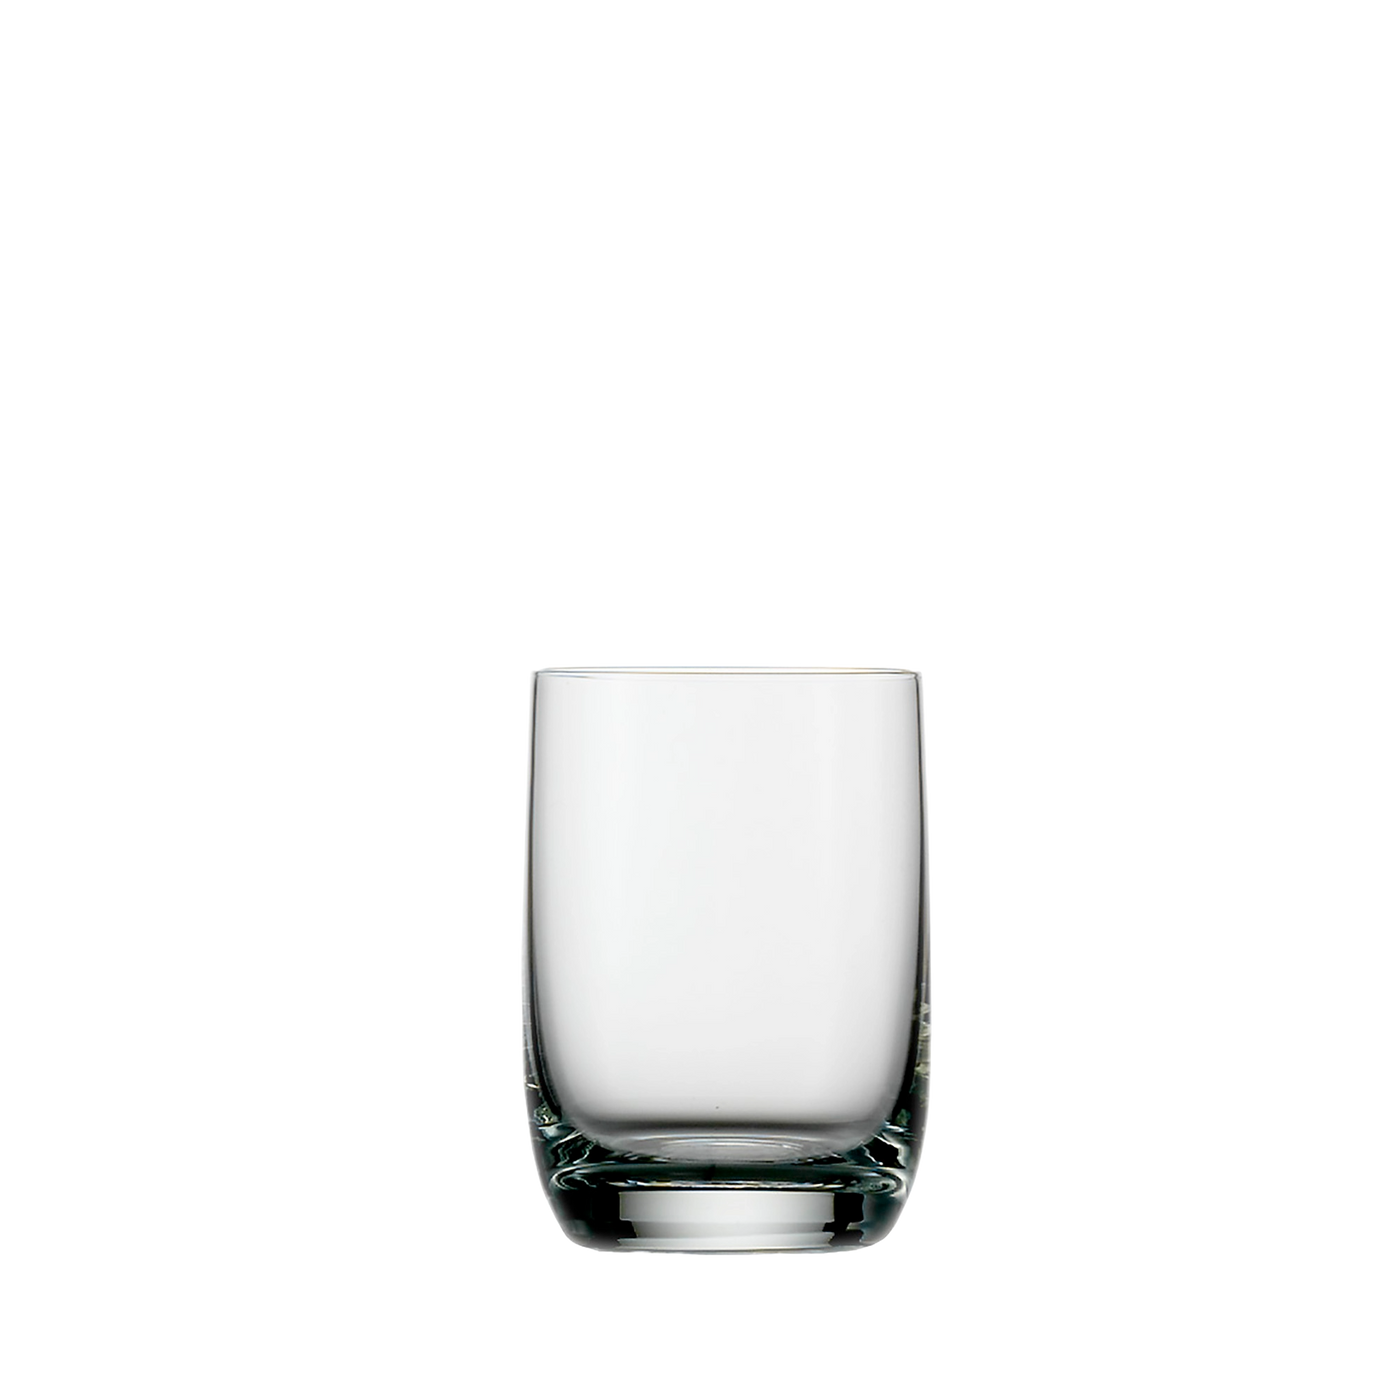 Weinland Shot Glass 2 3⁄4 oz - Set of six.